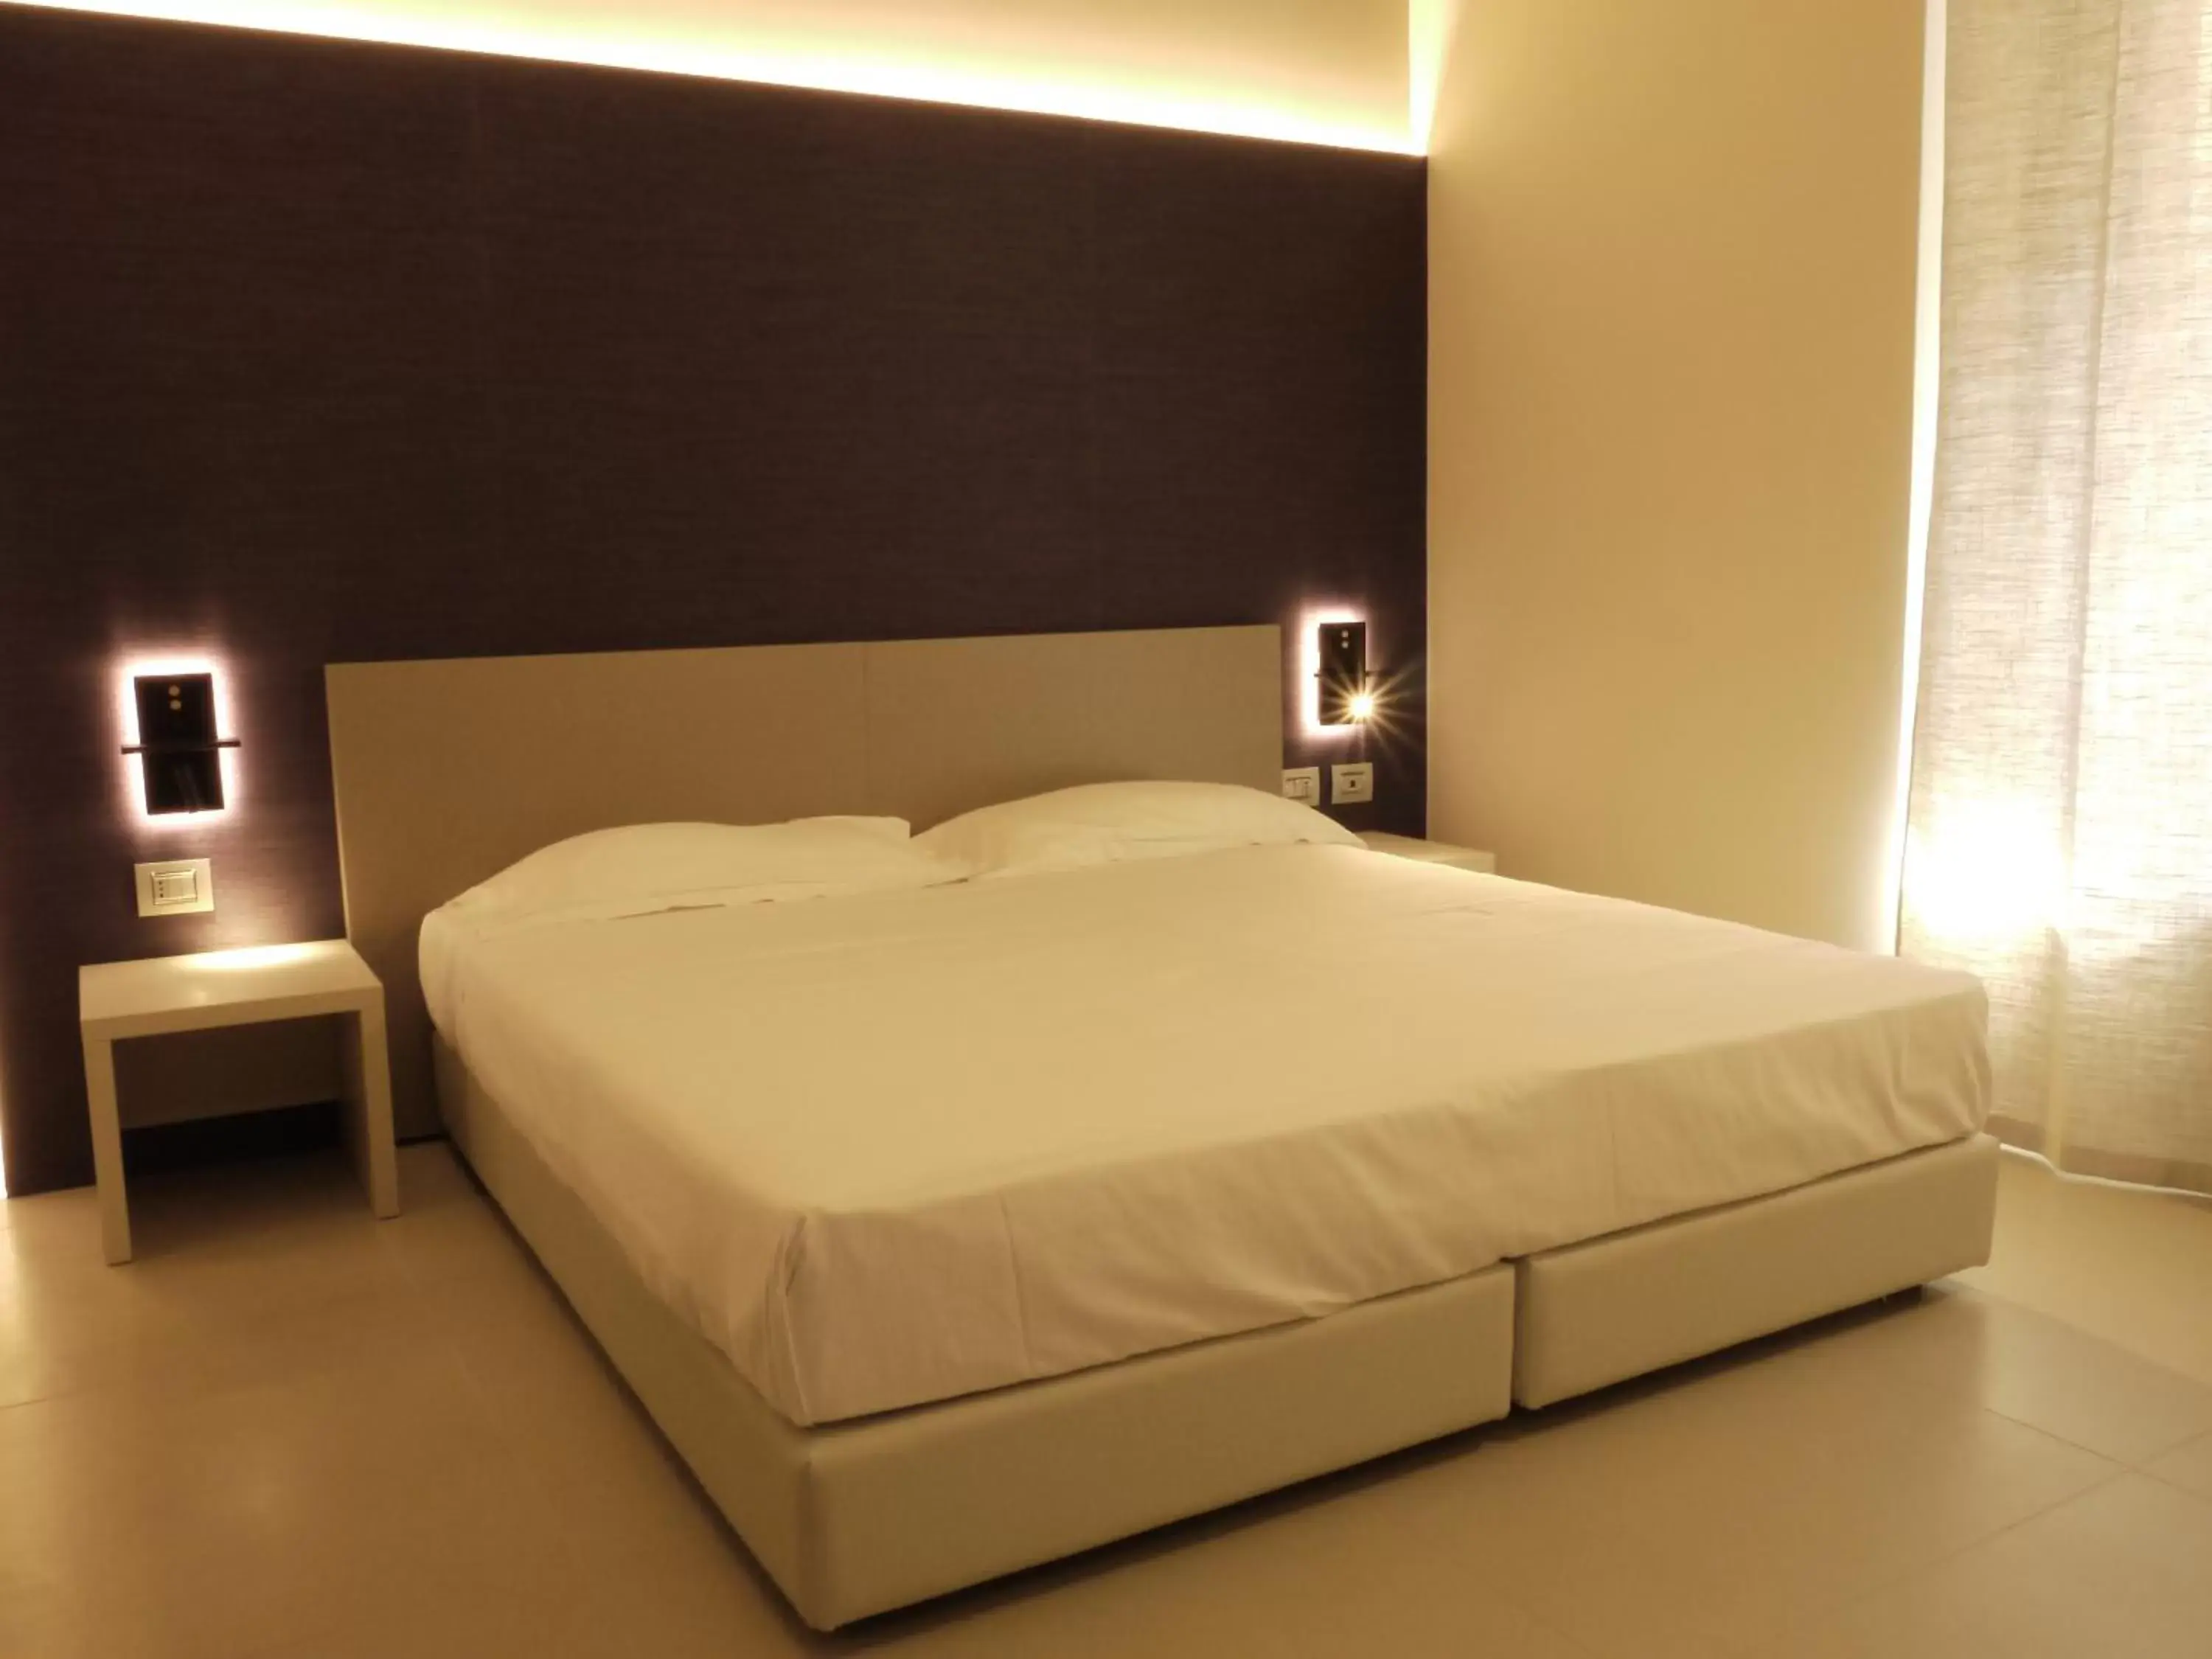 Bed, Room Photo in RB del Teatro&Apartaments